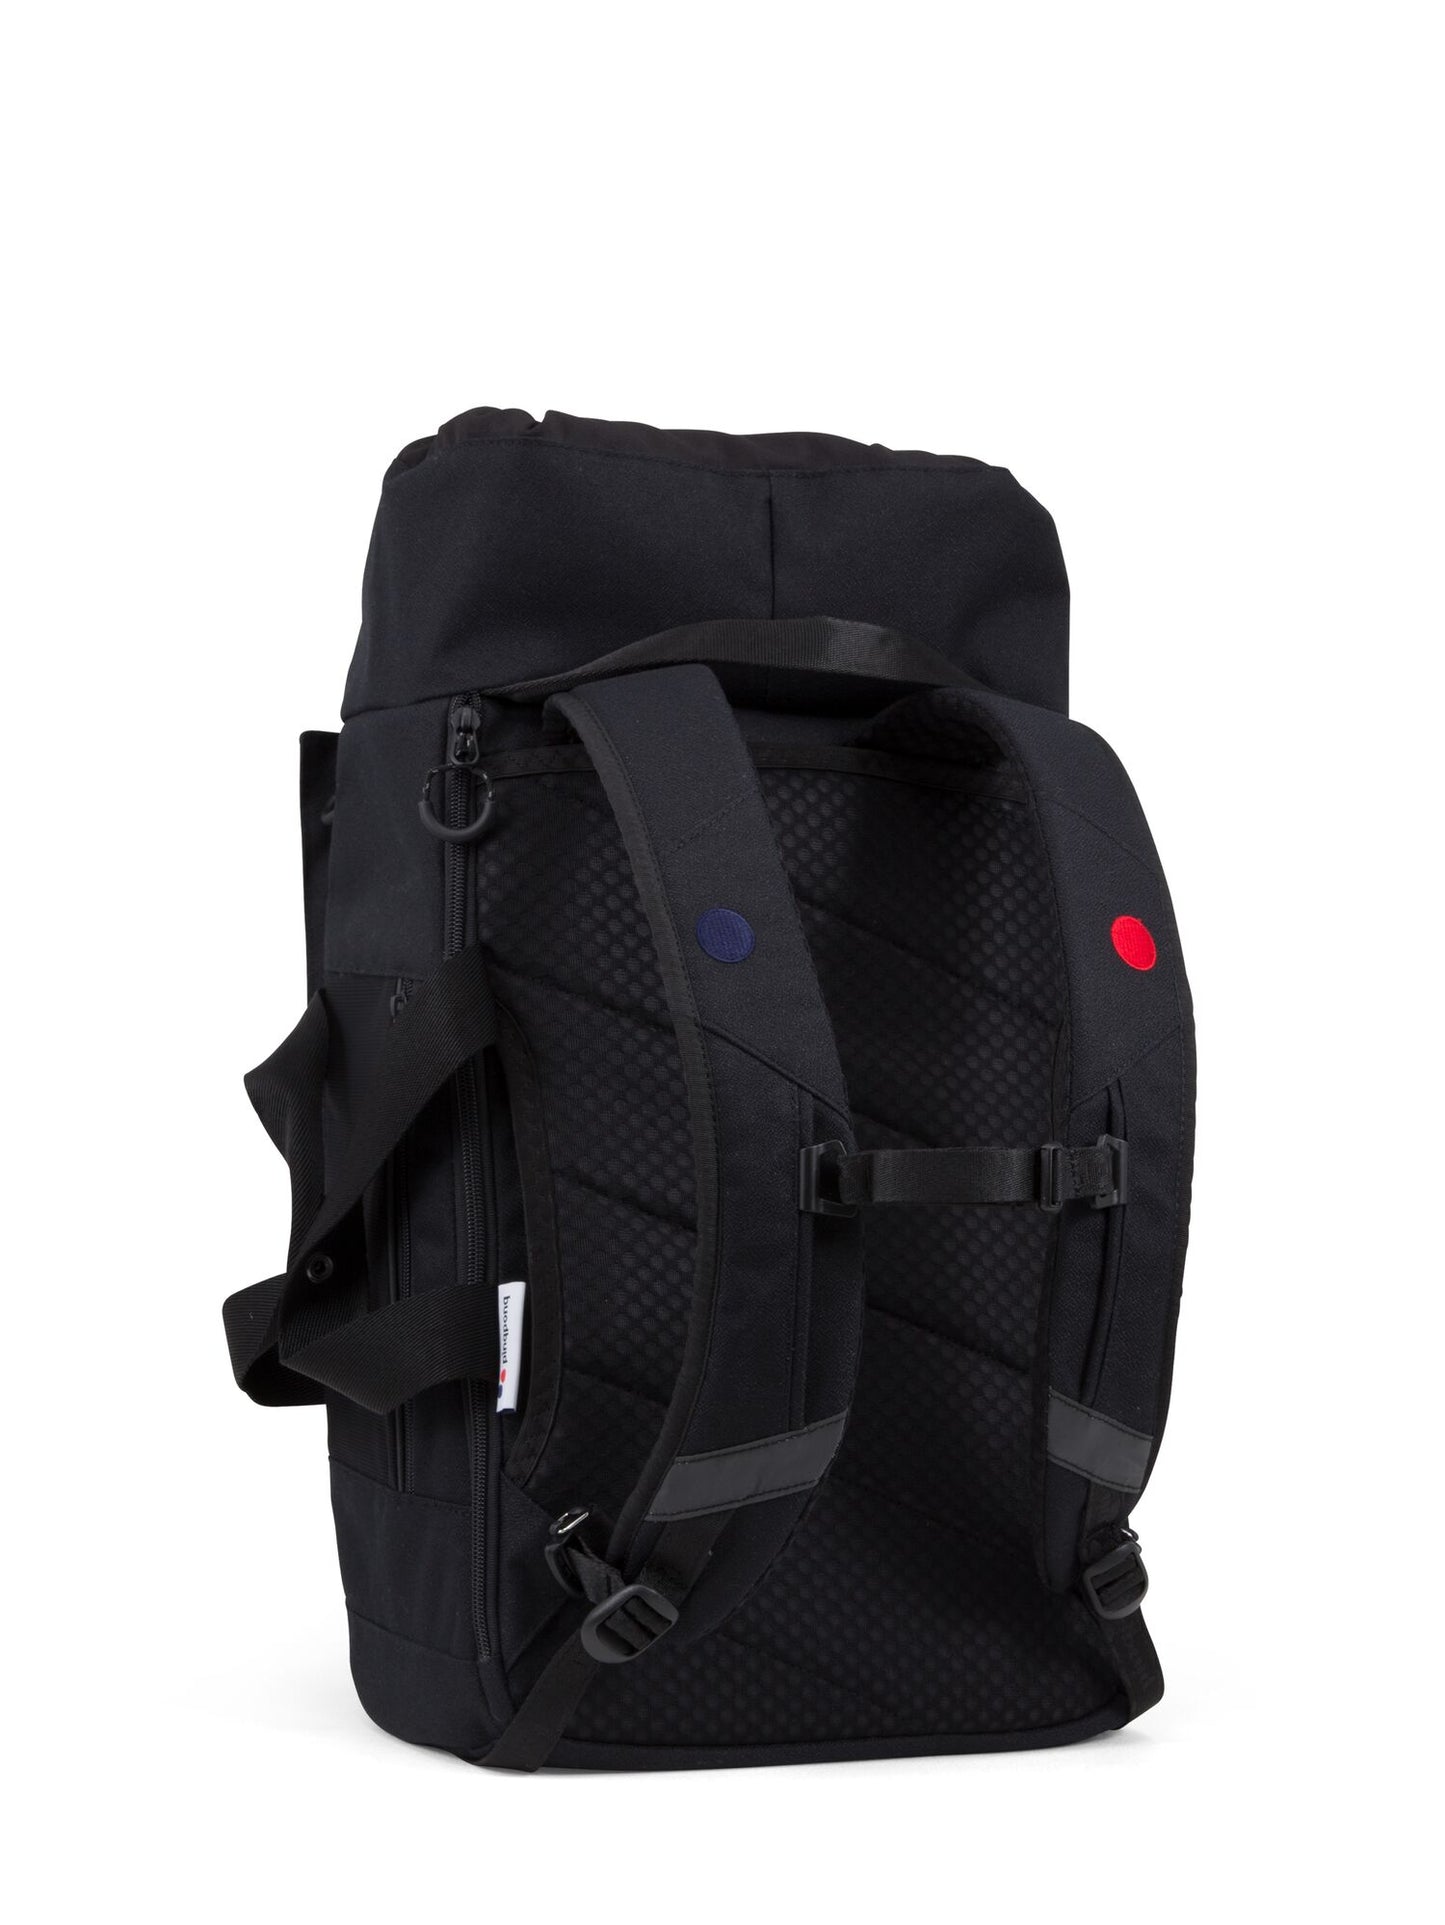 pinqponq-backpack-Blok-Medium-Licorice-Black-back